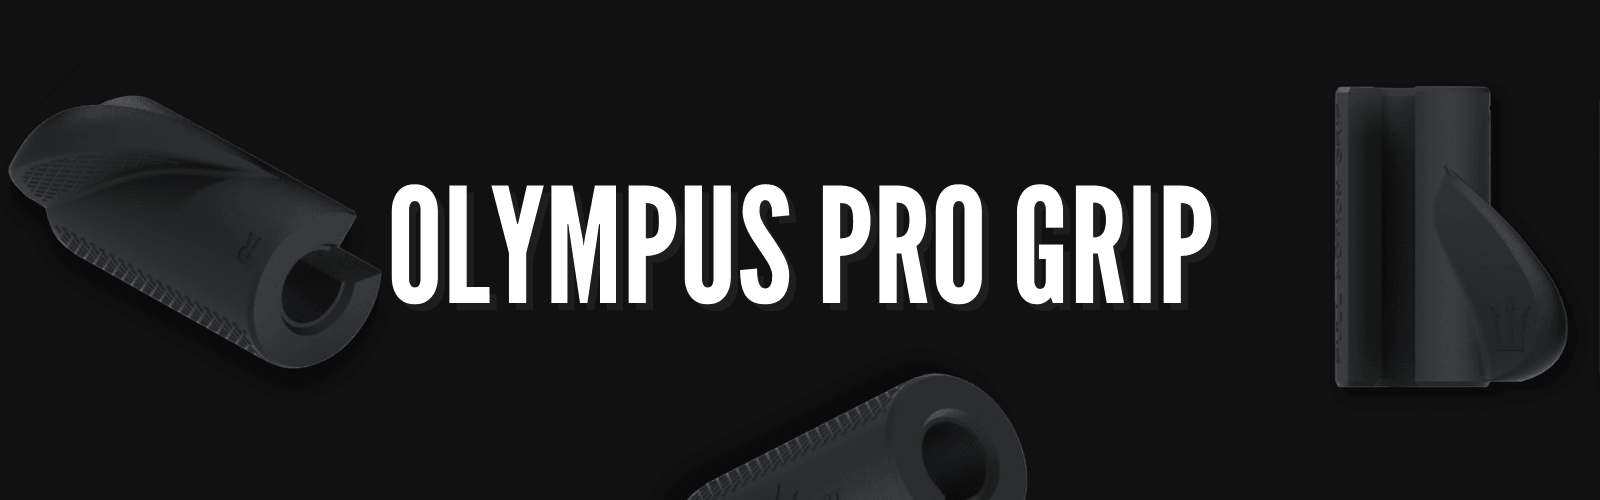 Olympus Pro Grip